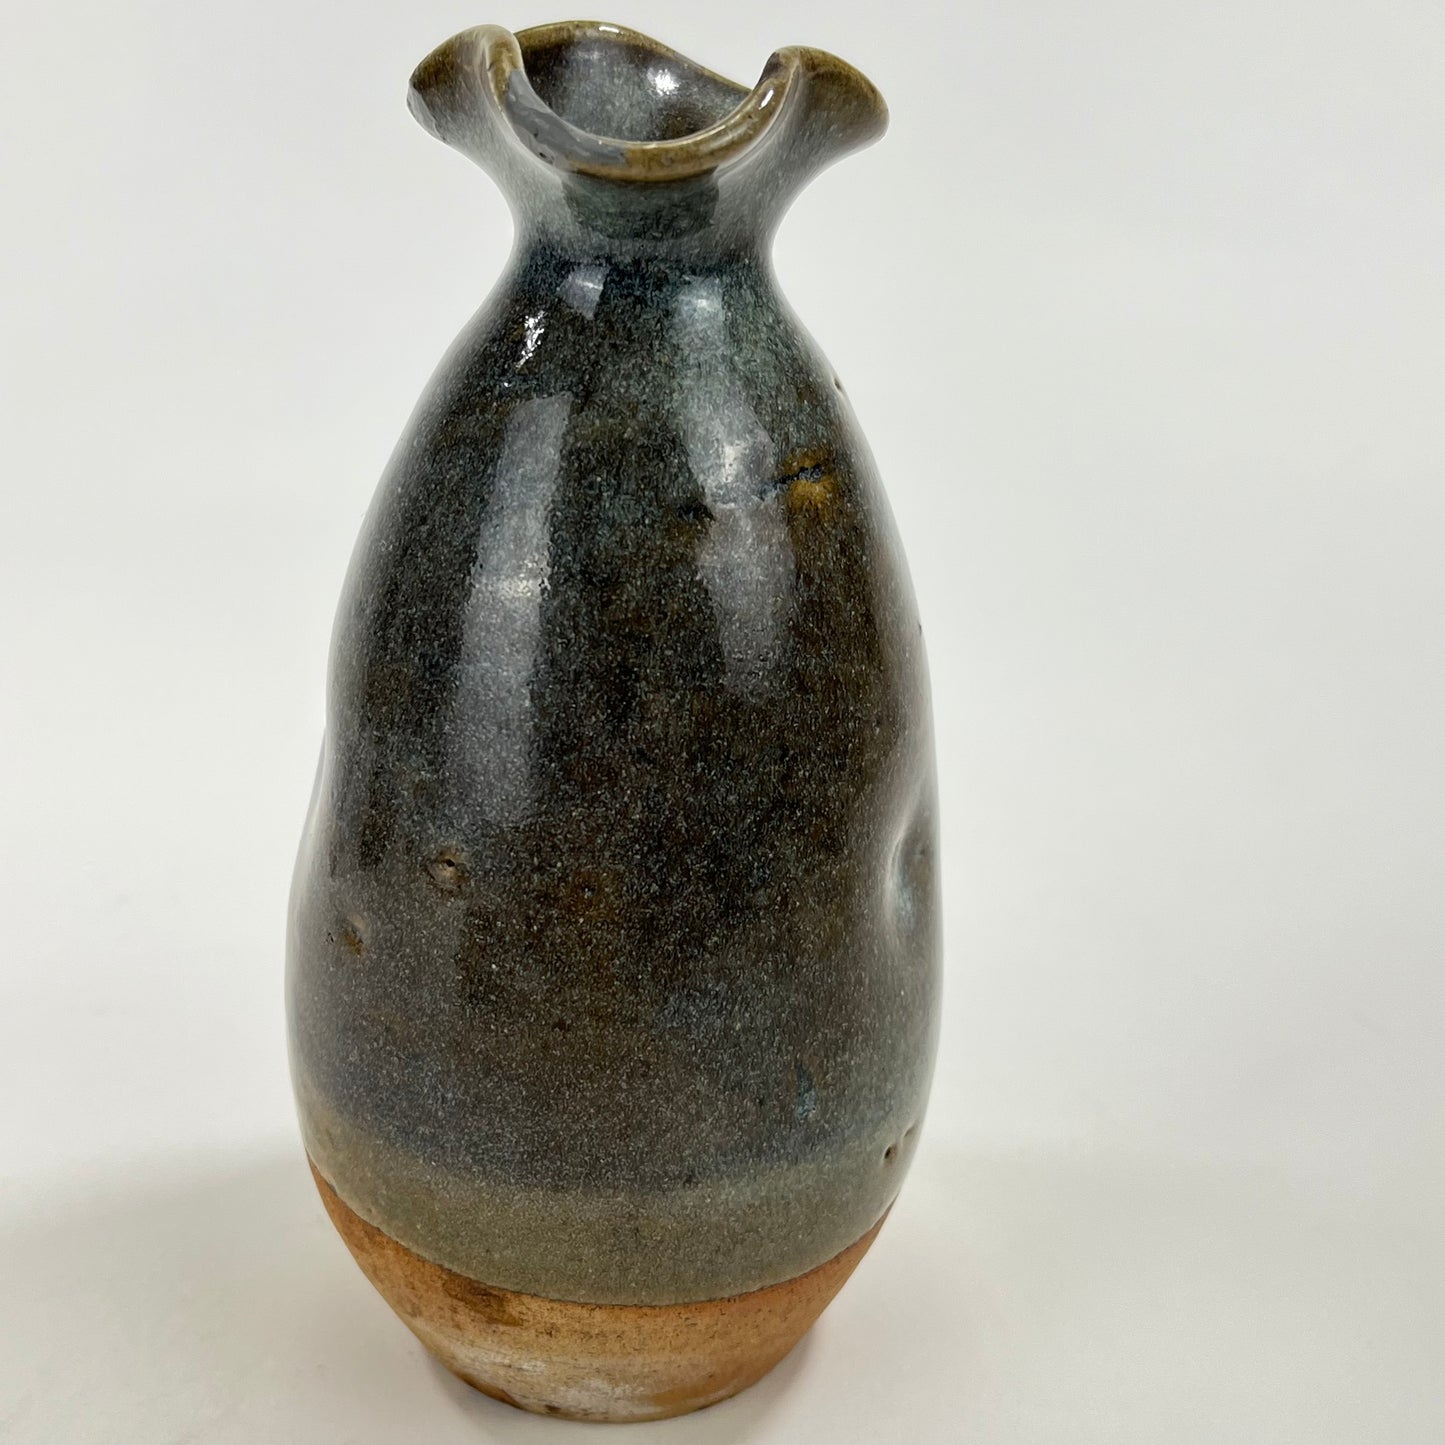 Antique Japanese Sake Bottle Tokkuri Brown&Blue Hares Fur Glaze Spout 8” chipped rim